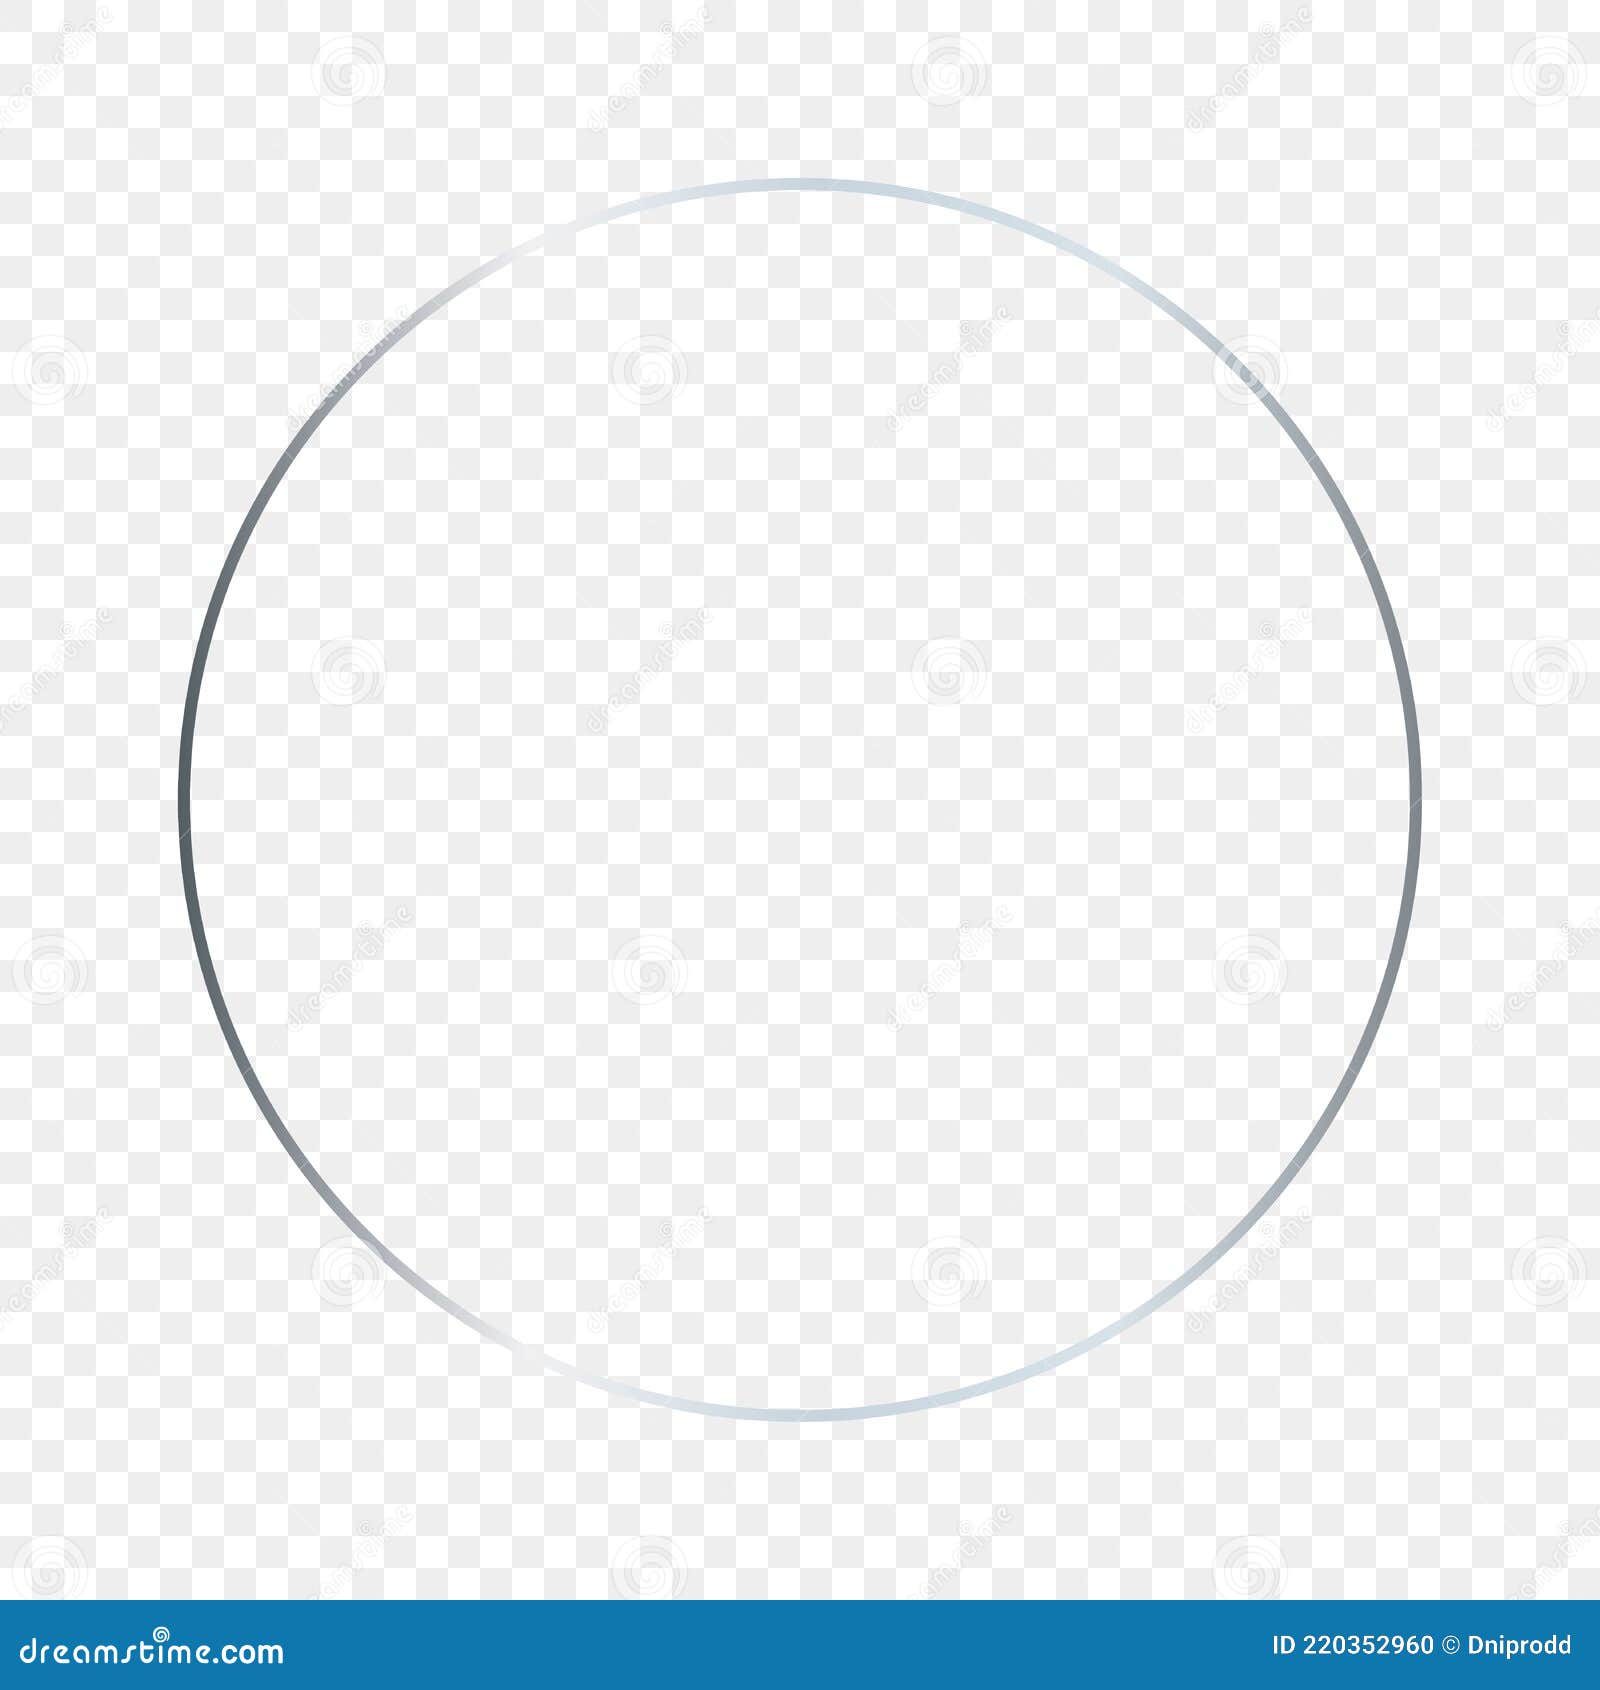 ShinyFrame-188 stock vector. Illustration of ellipse - 220352960